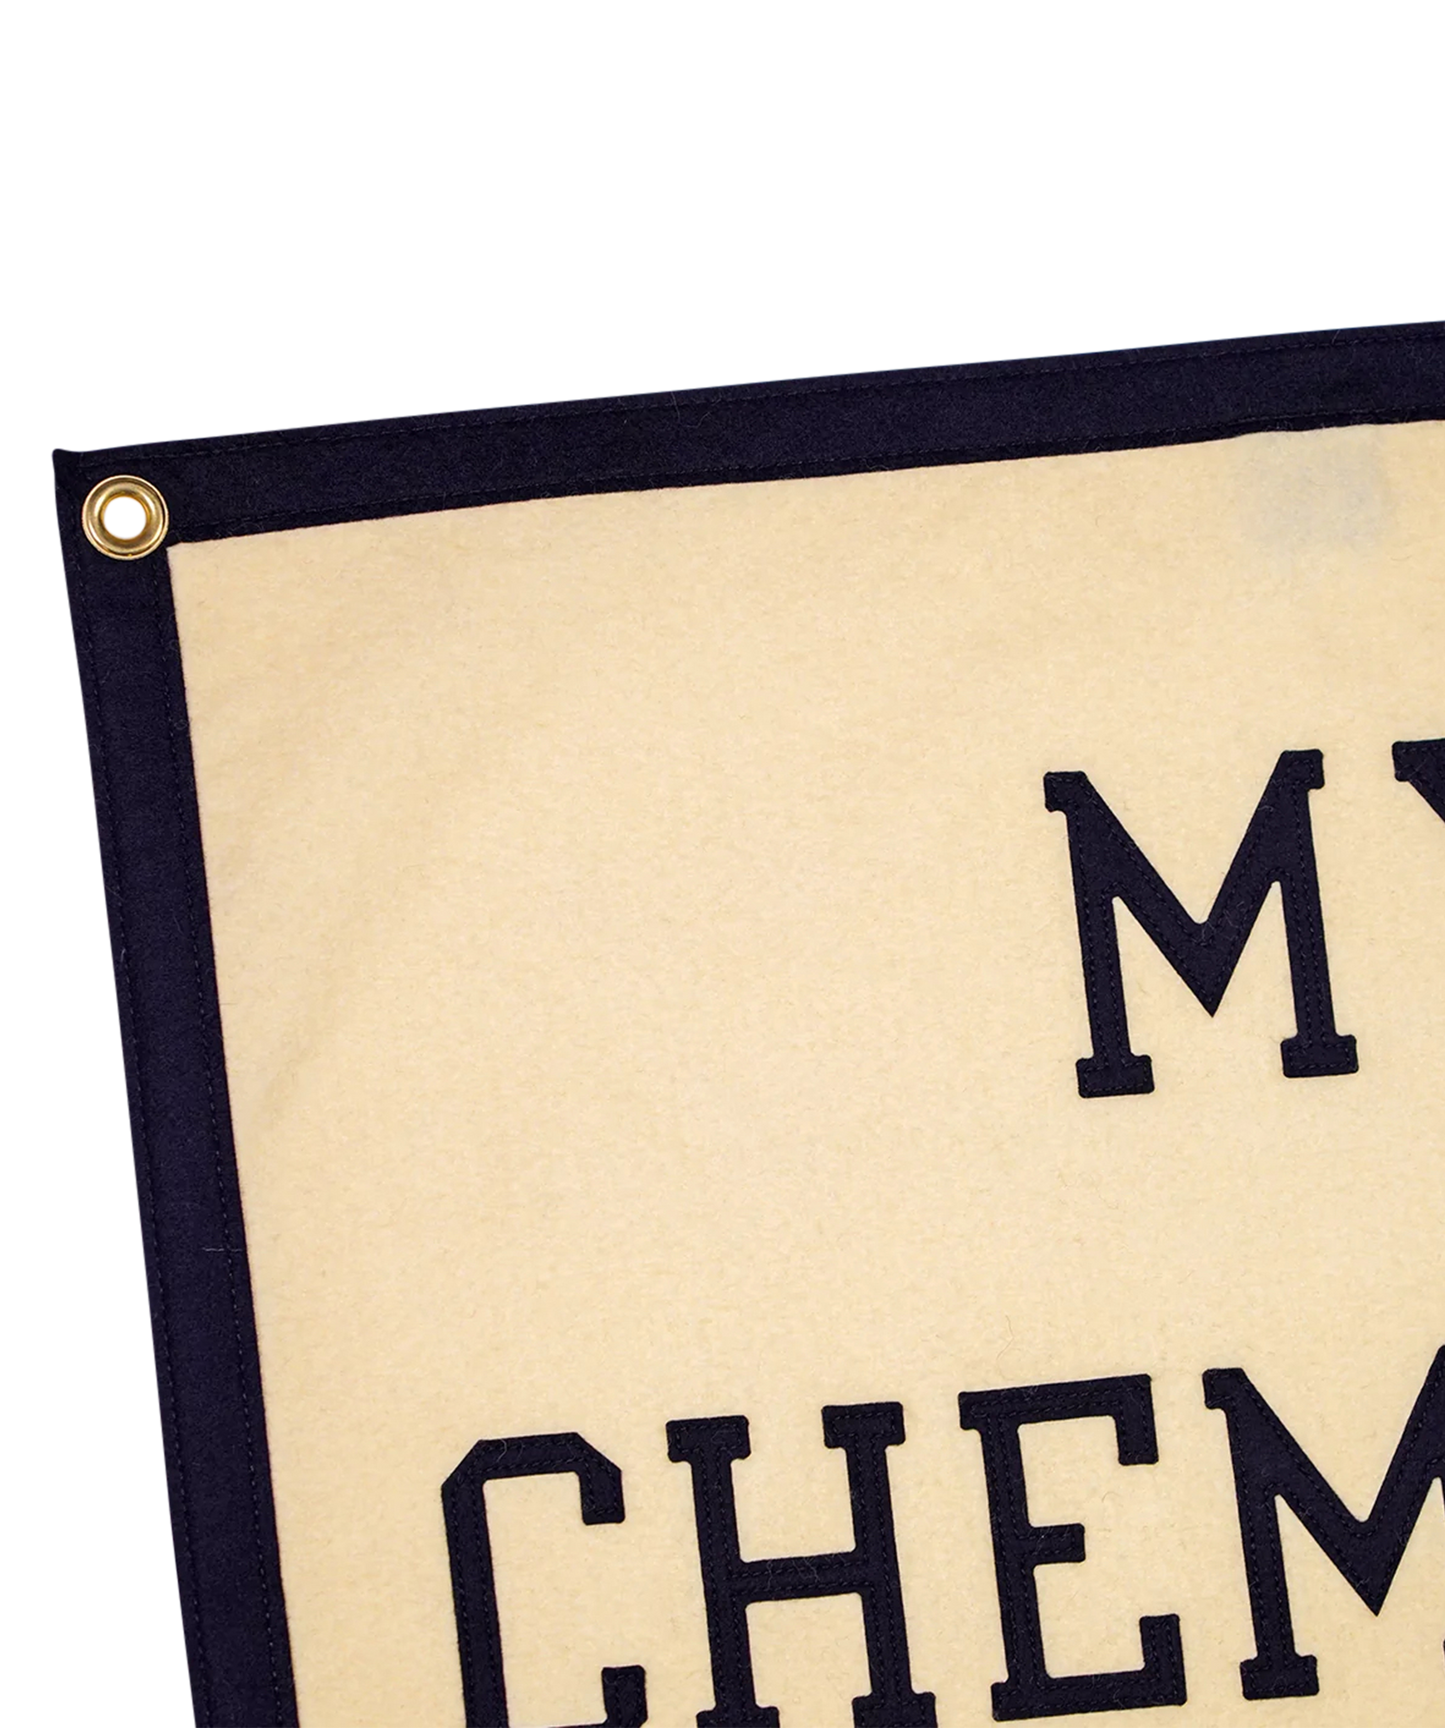 My Chemical Romance Championship Banner • MCR x Oxford Pennant